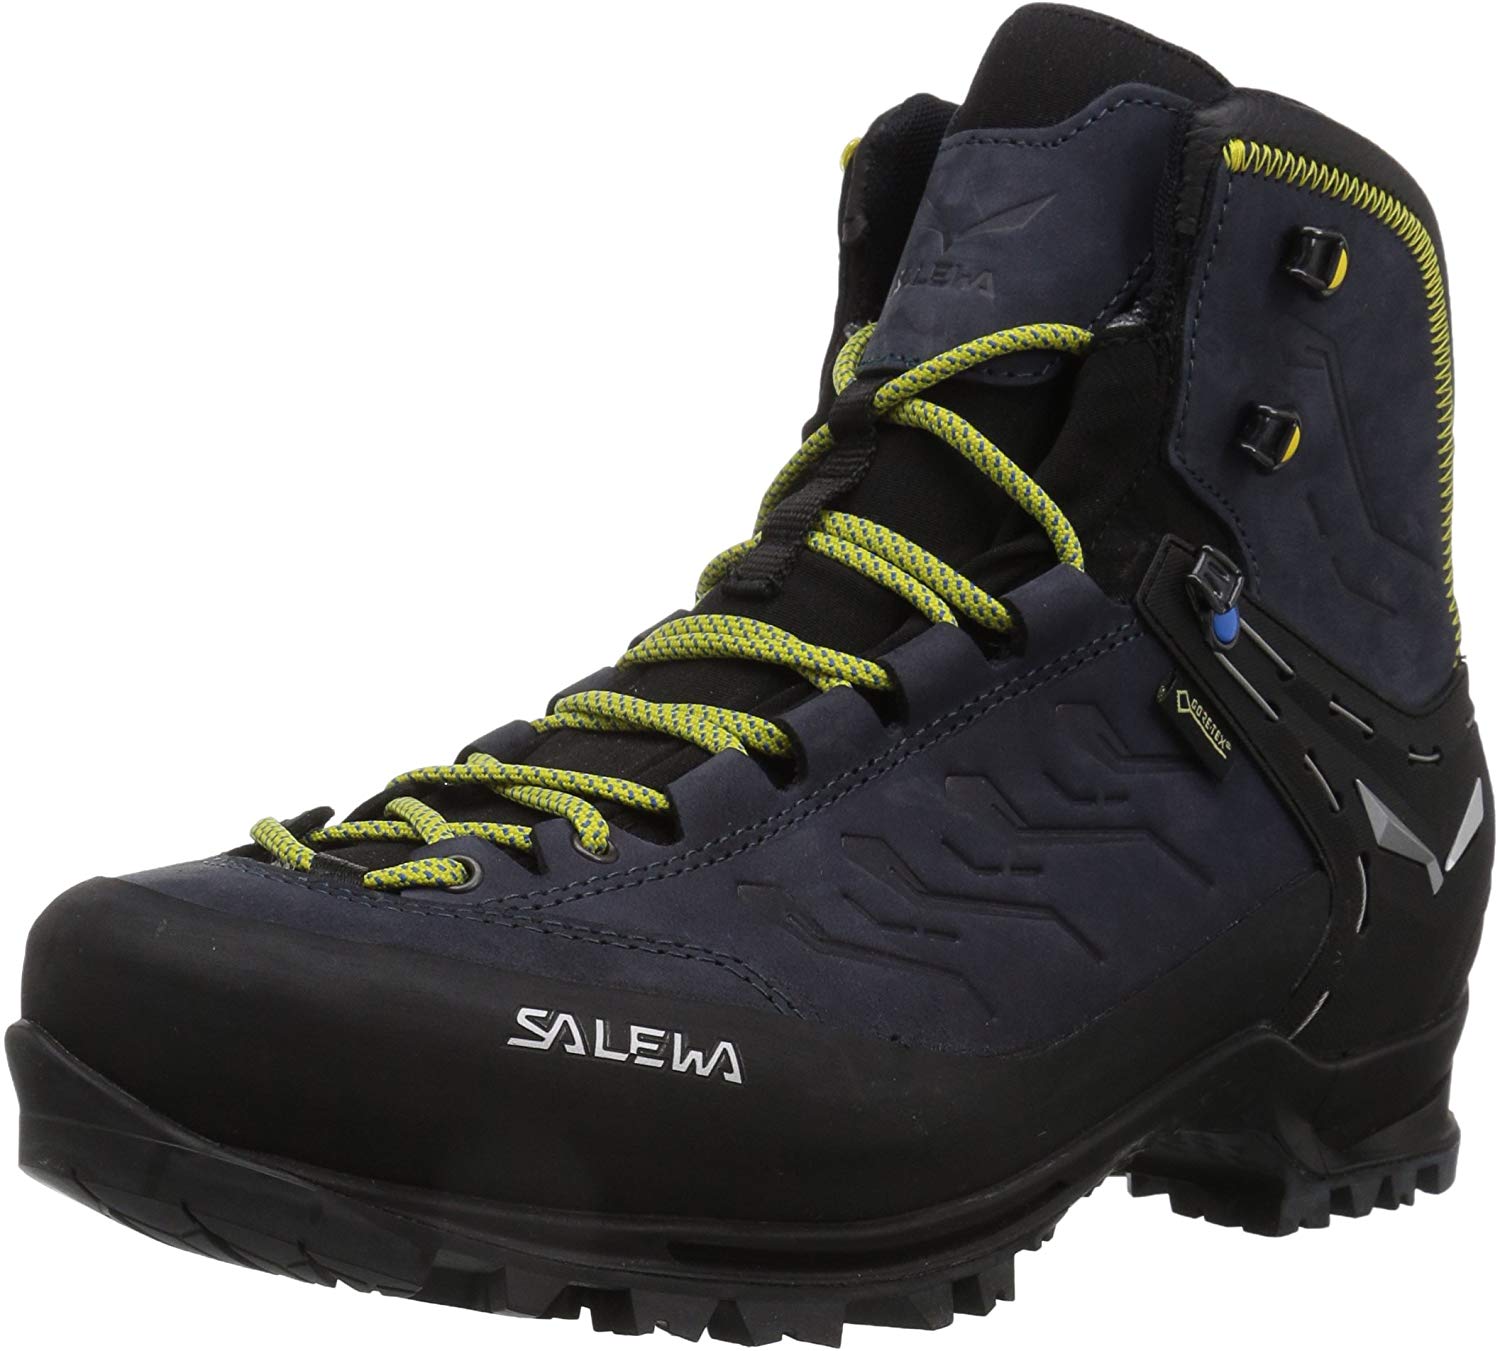 Salewa Men's Rapace GTX Mountaineering Boot